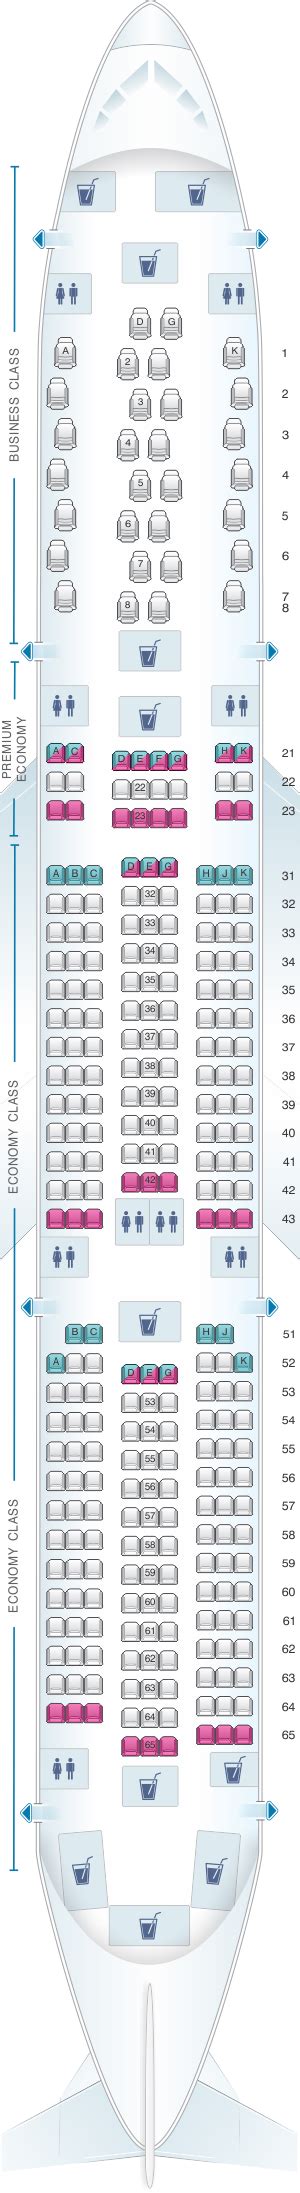 Airbus A Xwb Seating Charts Image To U